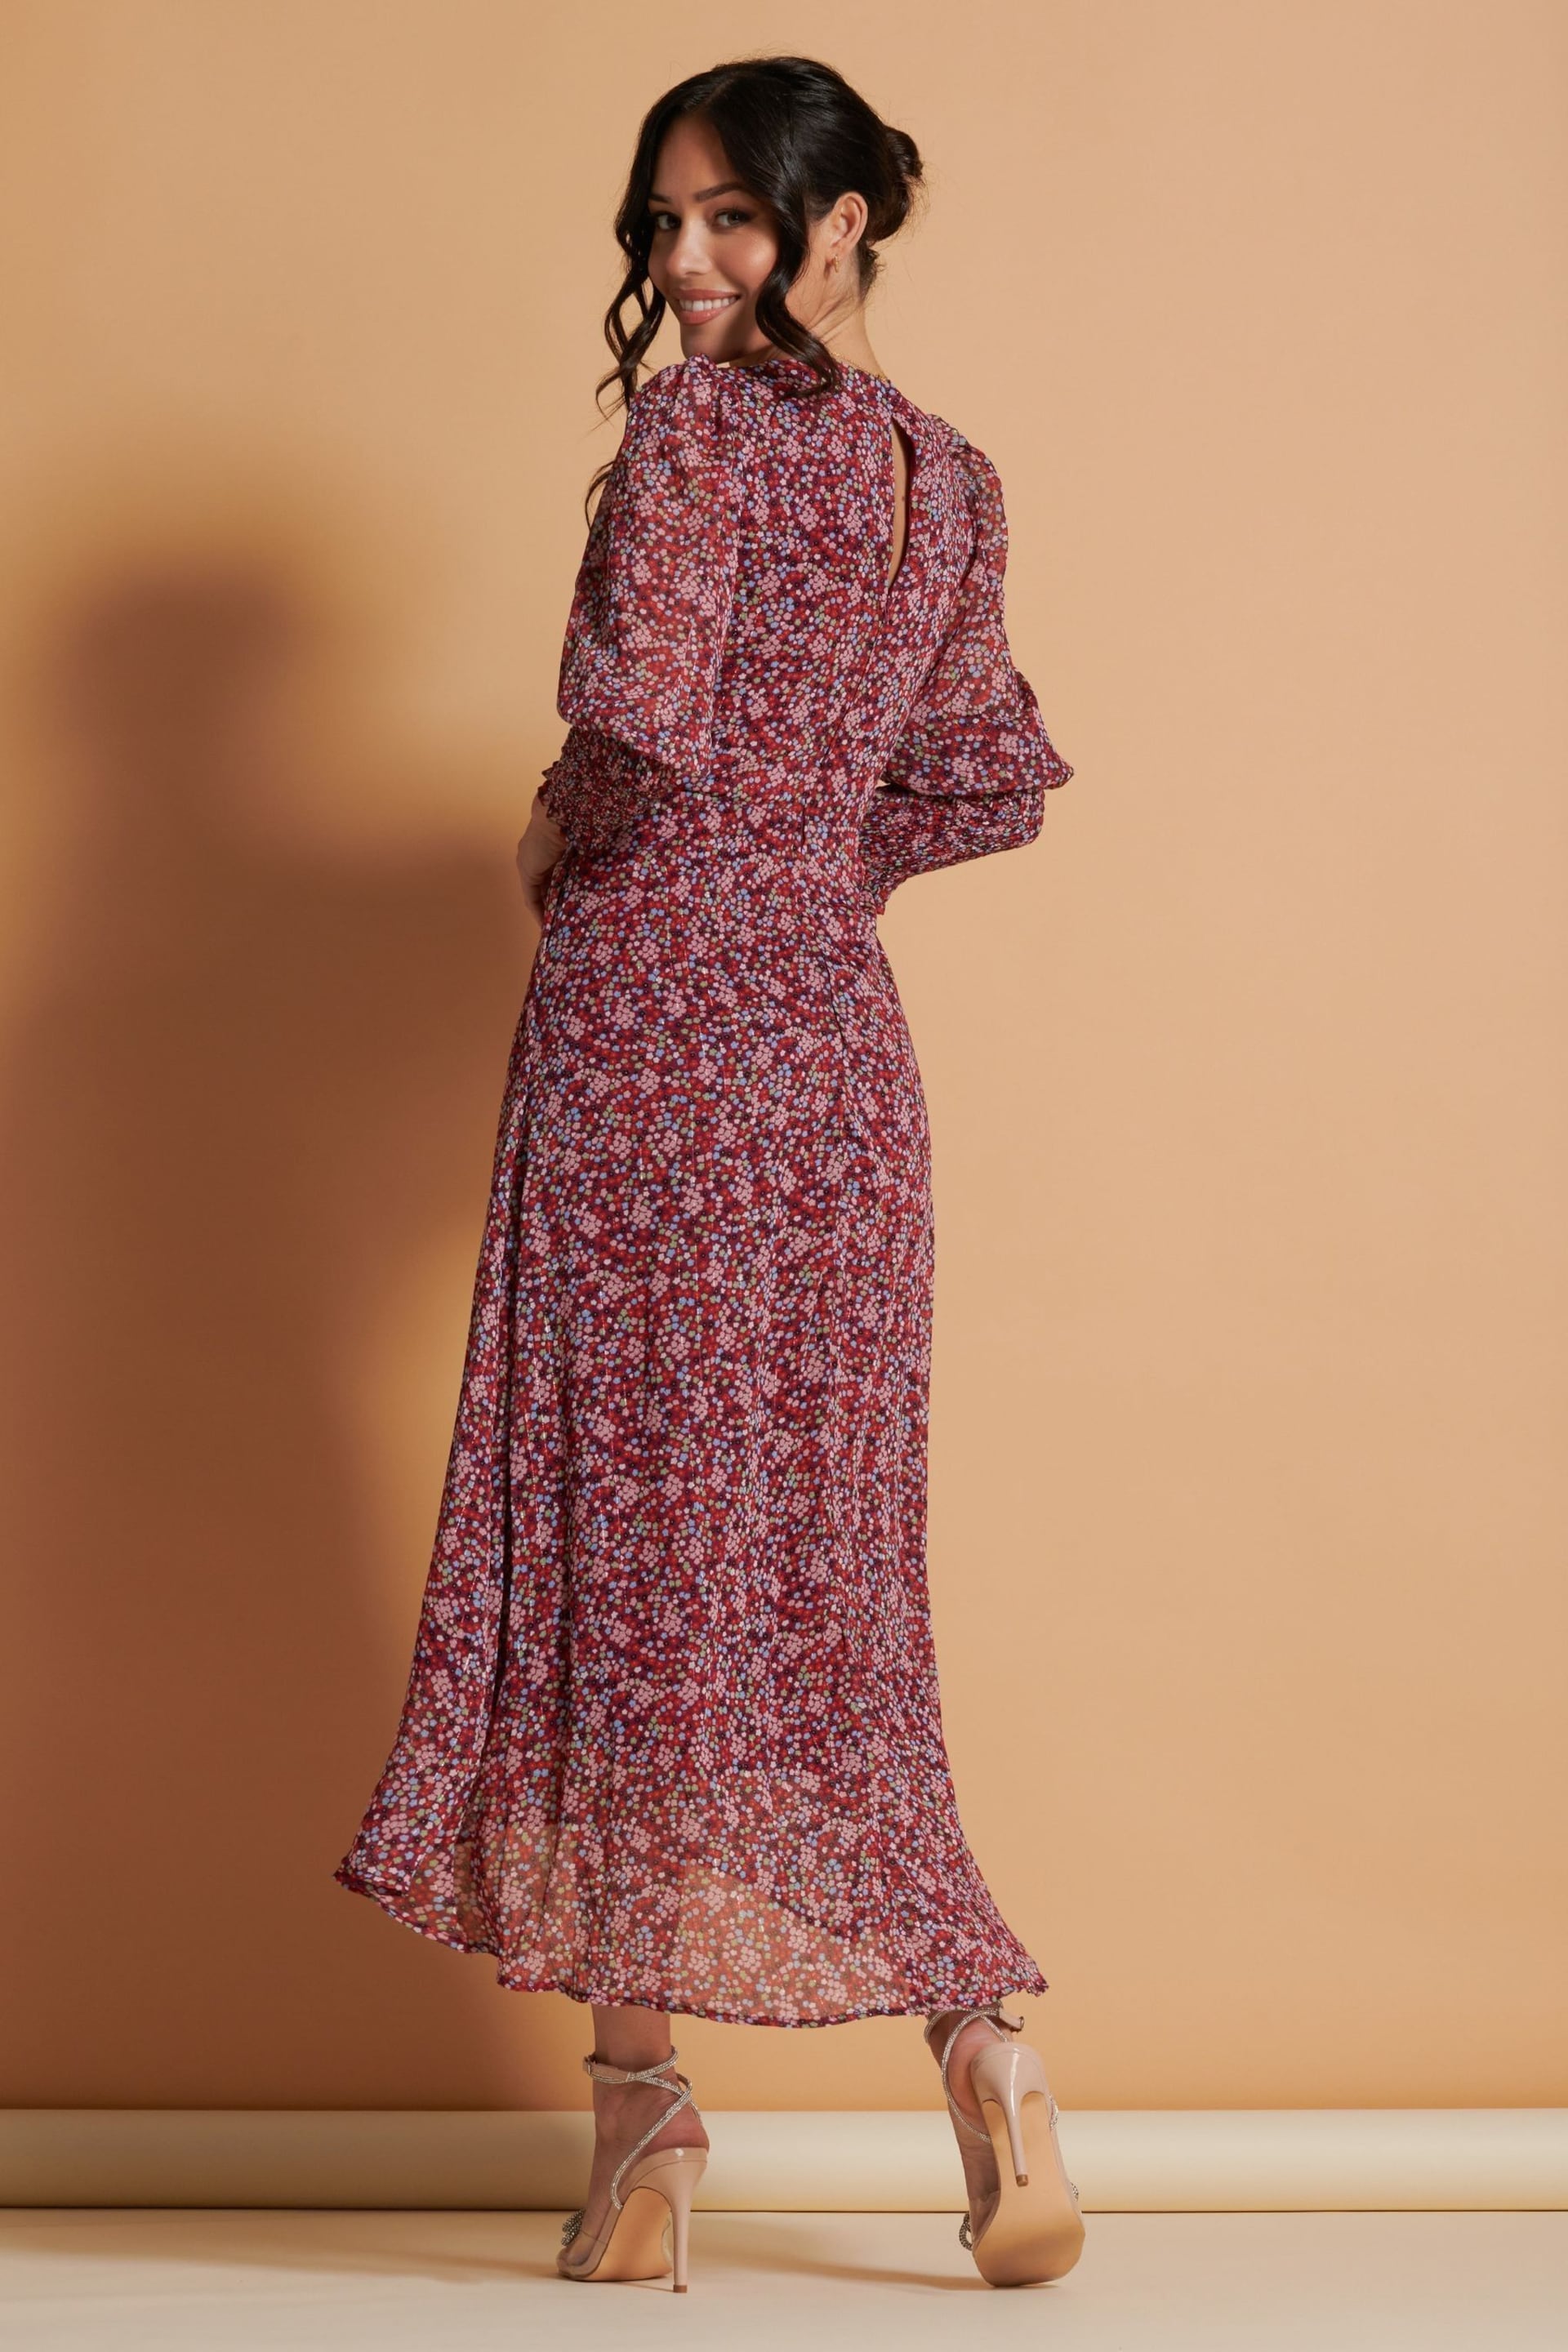 Jolie Moi Red Chiffon Print Maxi Dress - Image 2 of 6